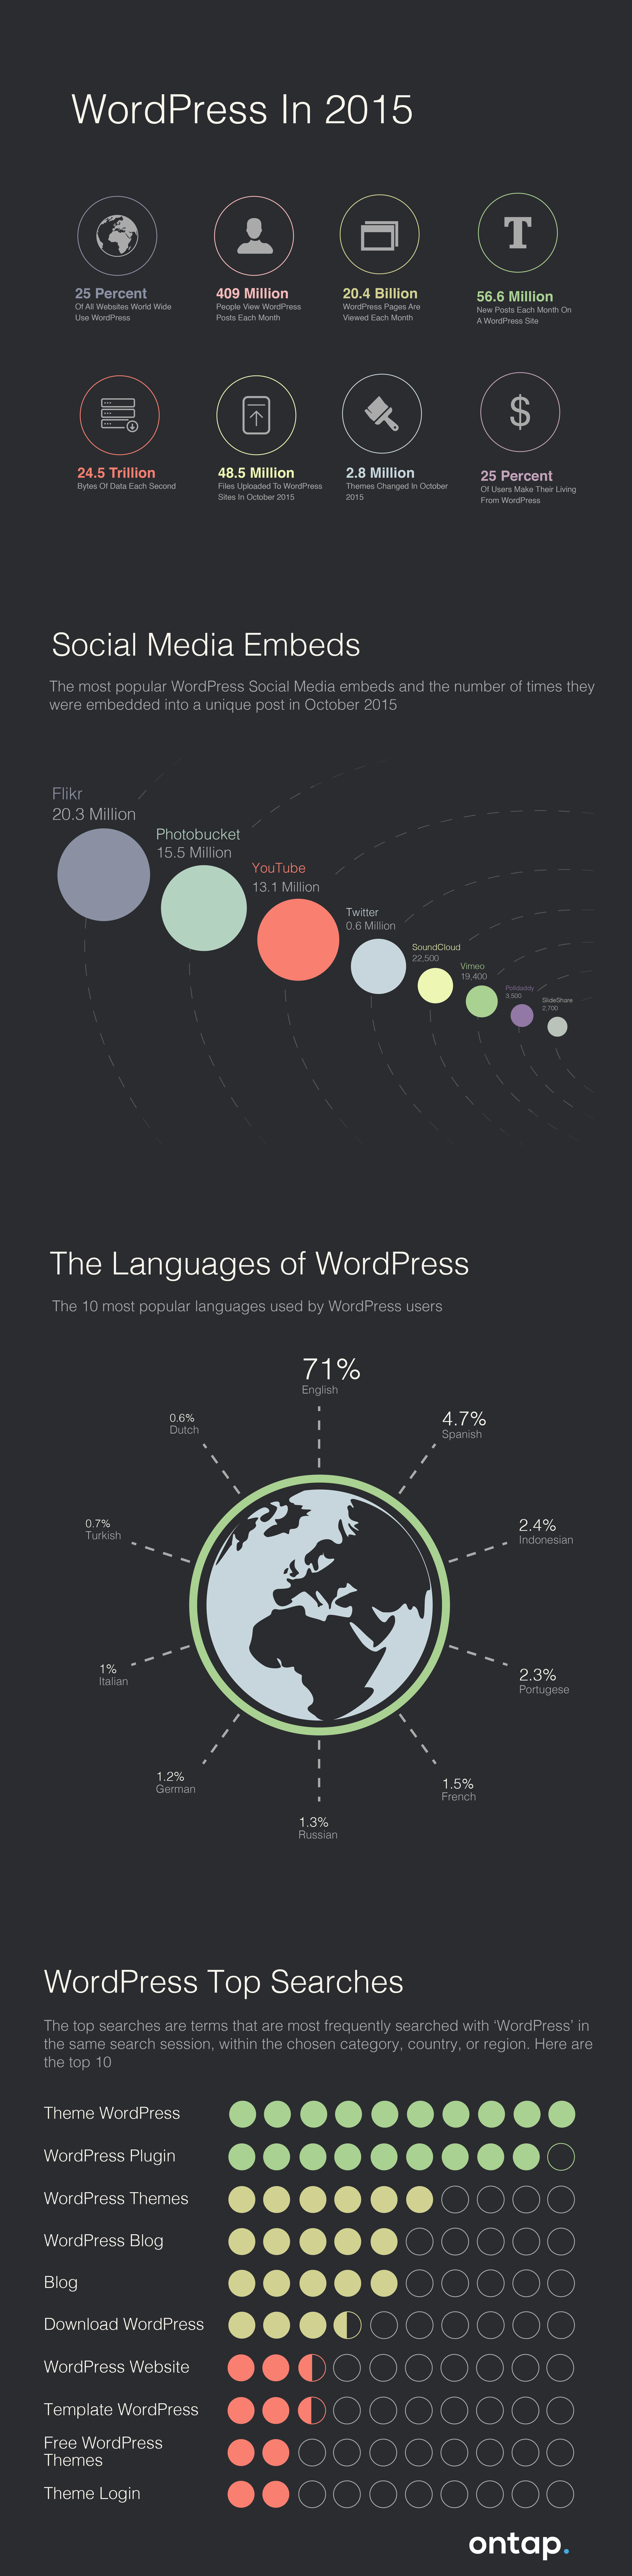 WordPress in 2015 inforgraphic